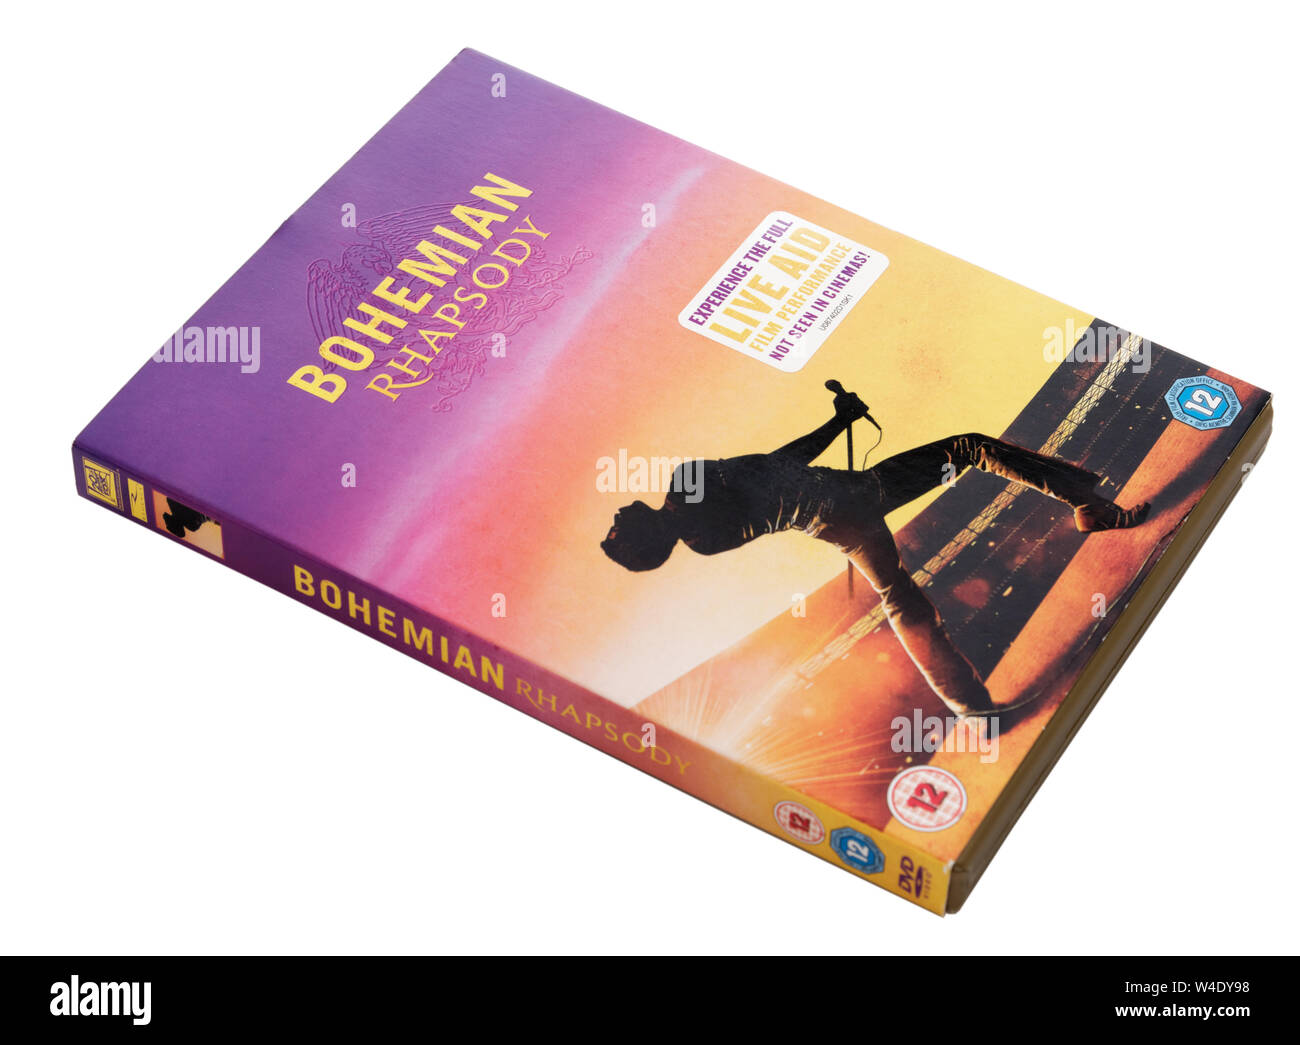 Bohemian Rhapsody DVD Foto stock - Alamy